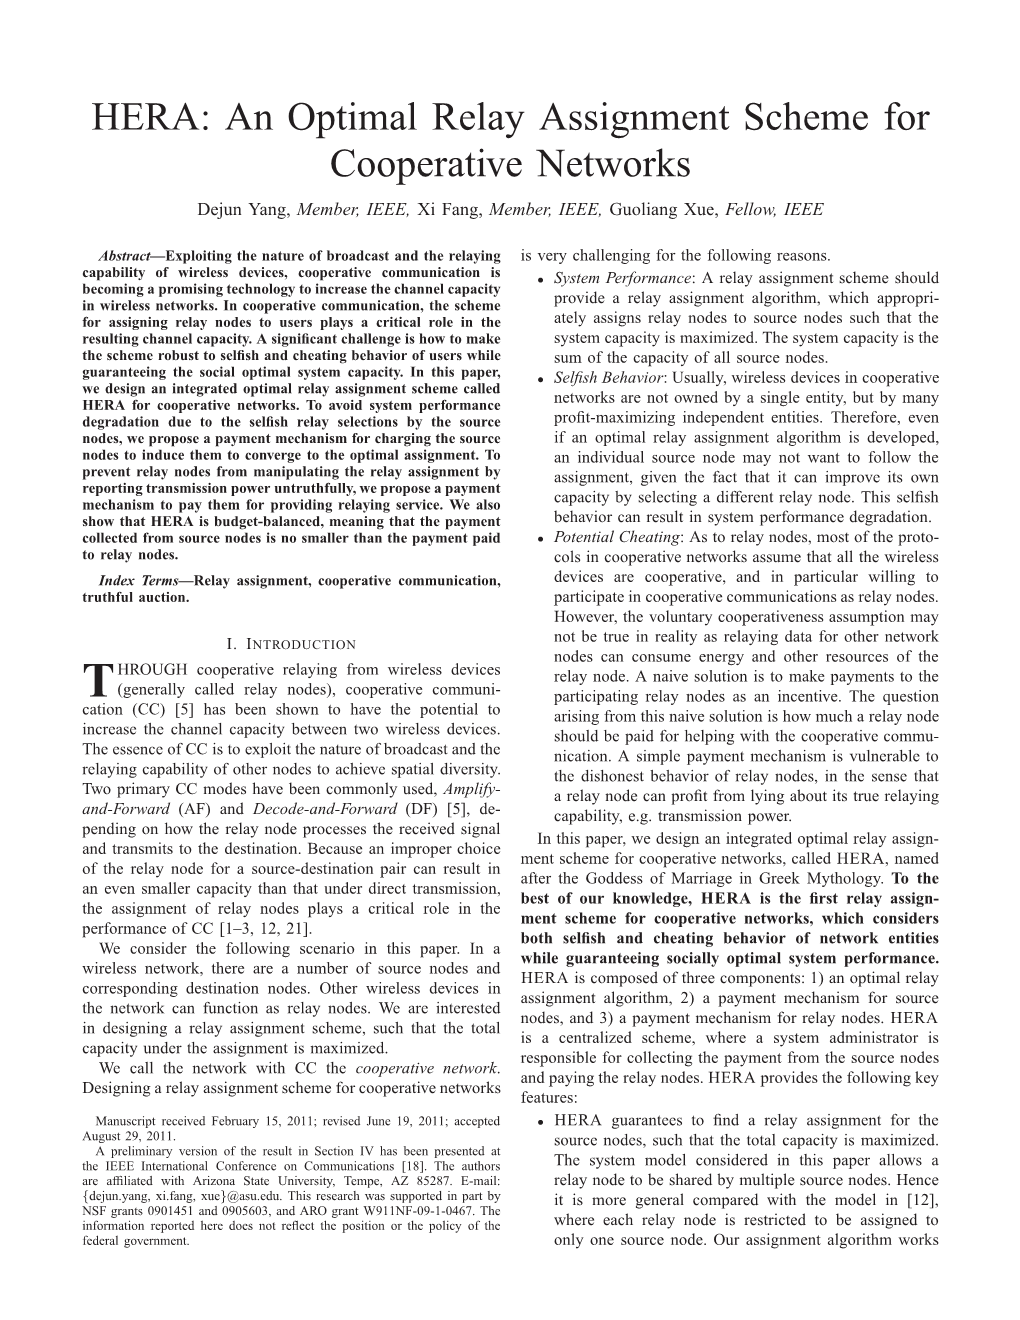 HERA: an Optimal Relay Assignment Scheme for Cooperative Networks Dejun Yang, Member, IEEE, Xi Fang, Member, IEEE, Guoliang Xue, Fellow, IEEE